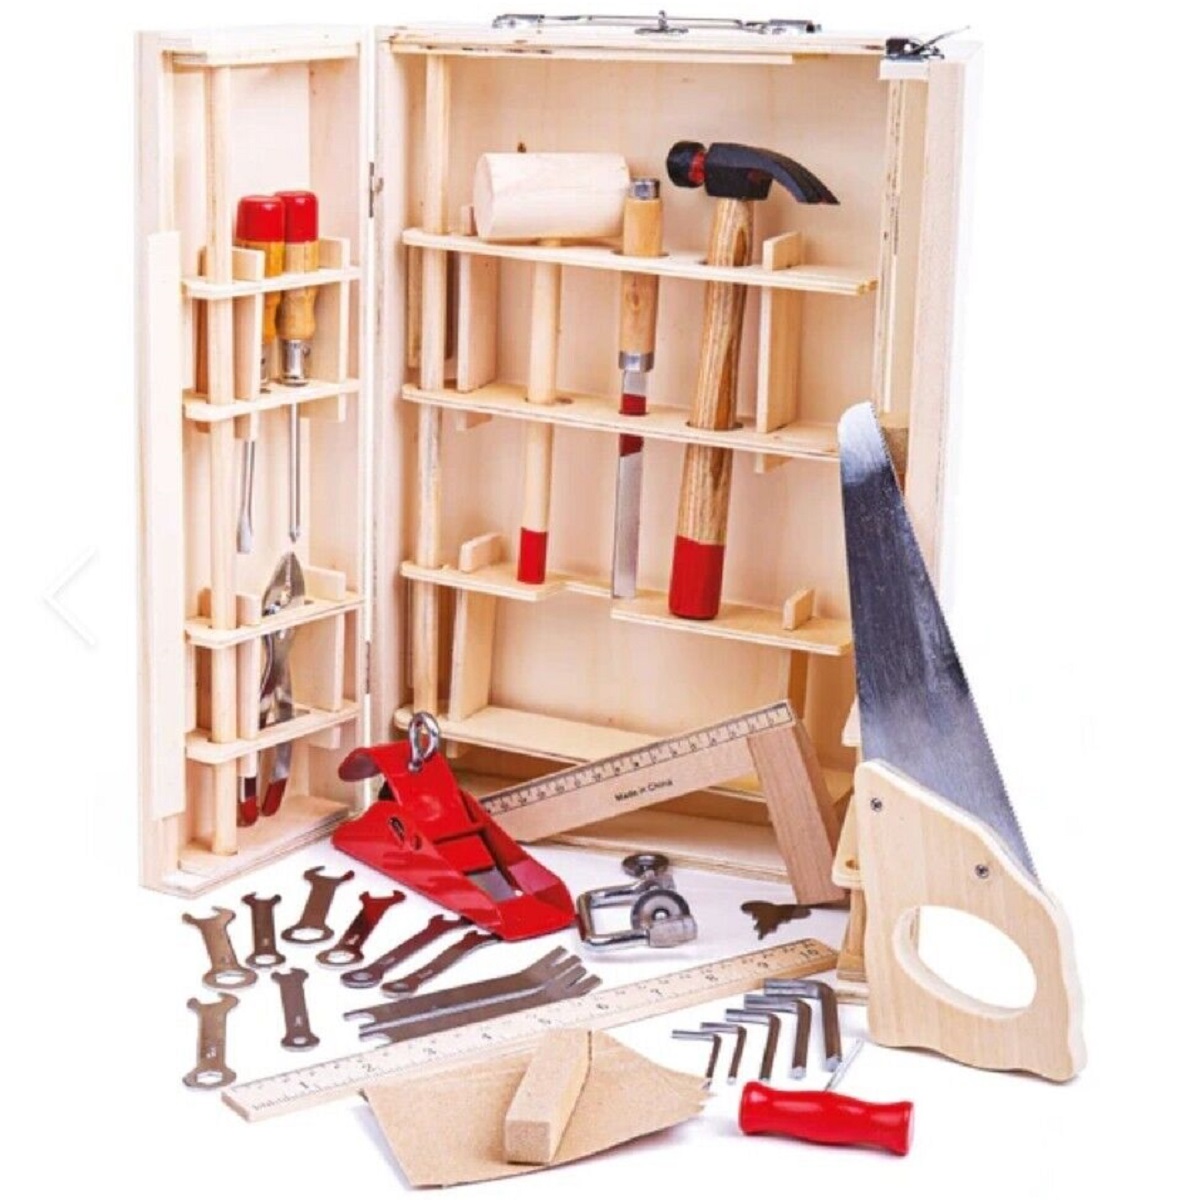 Junior woodworking tools uk Main Image